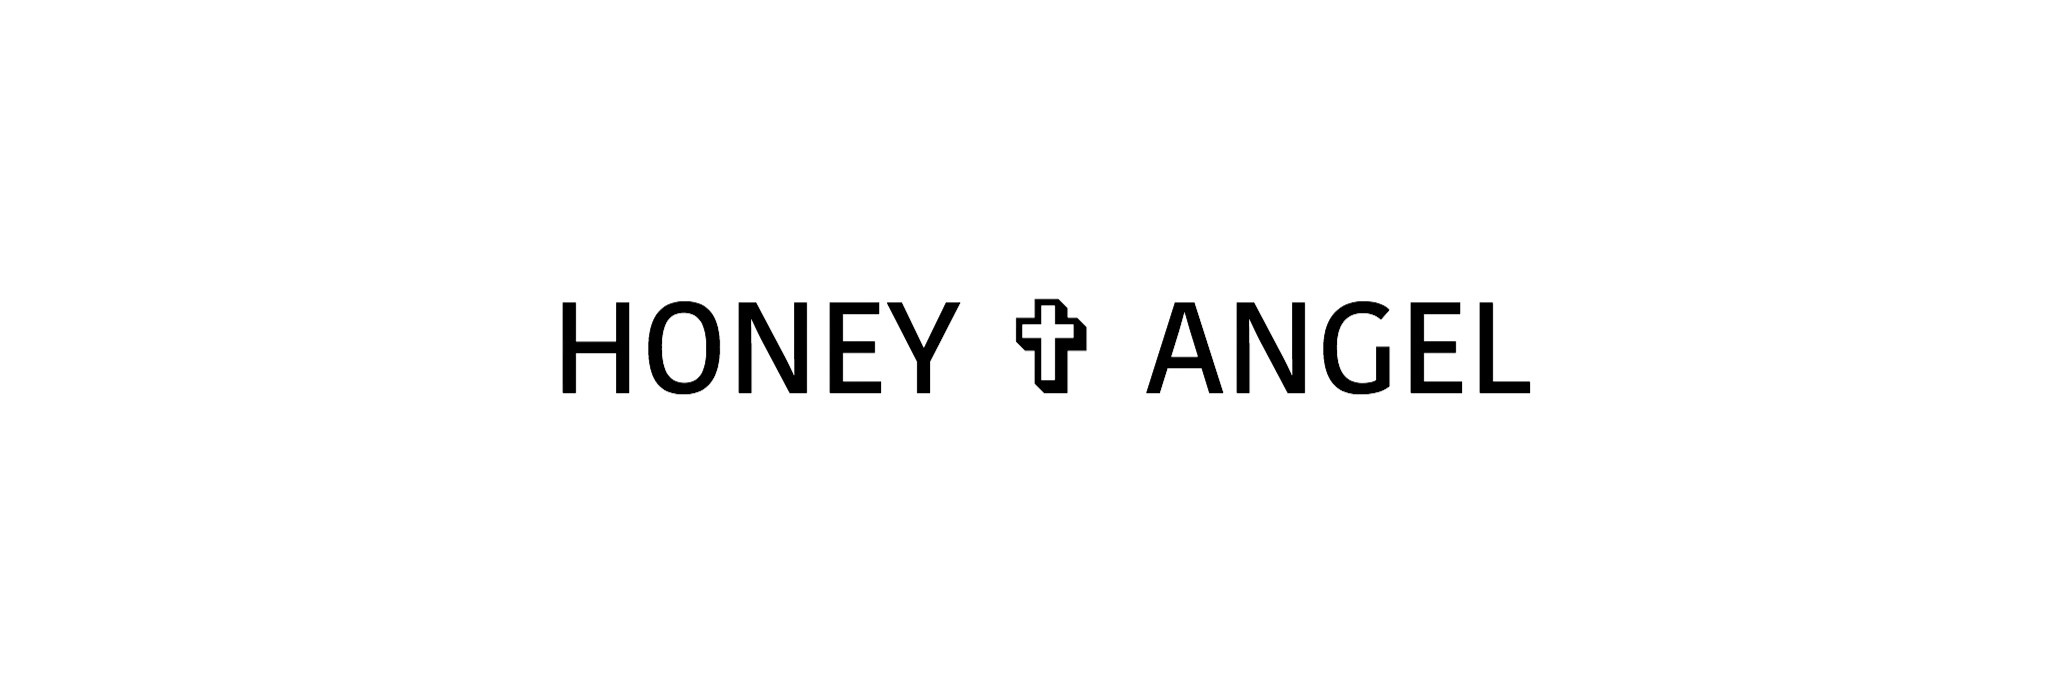 HONEY ✞ ANGEL